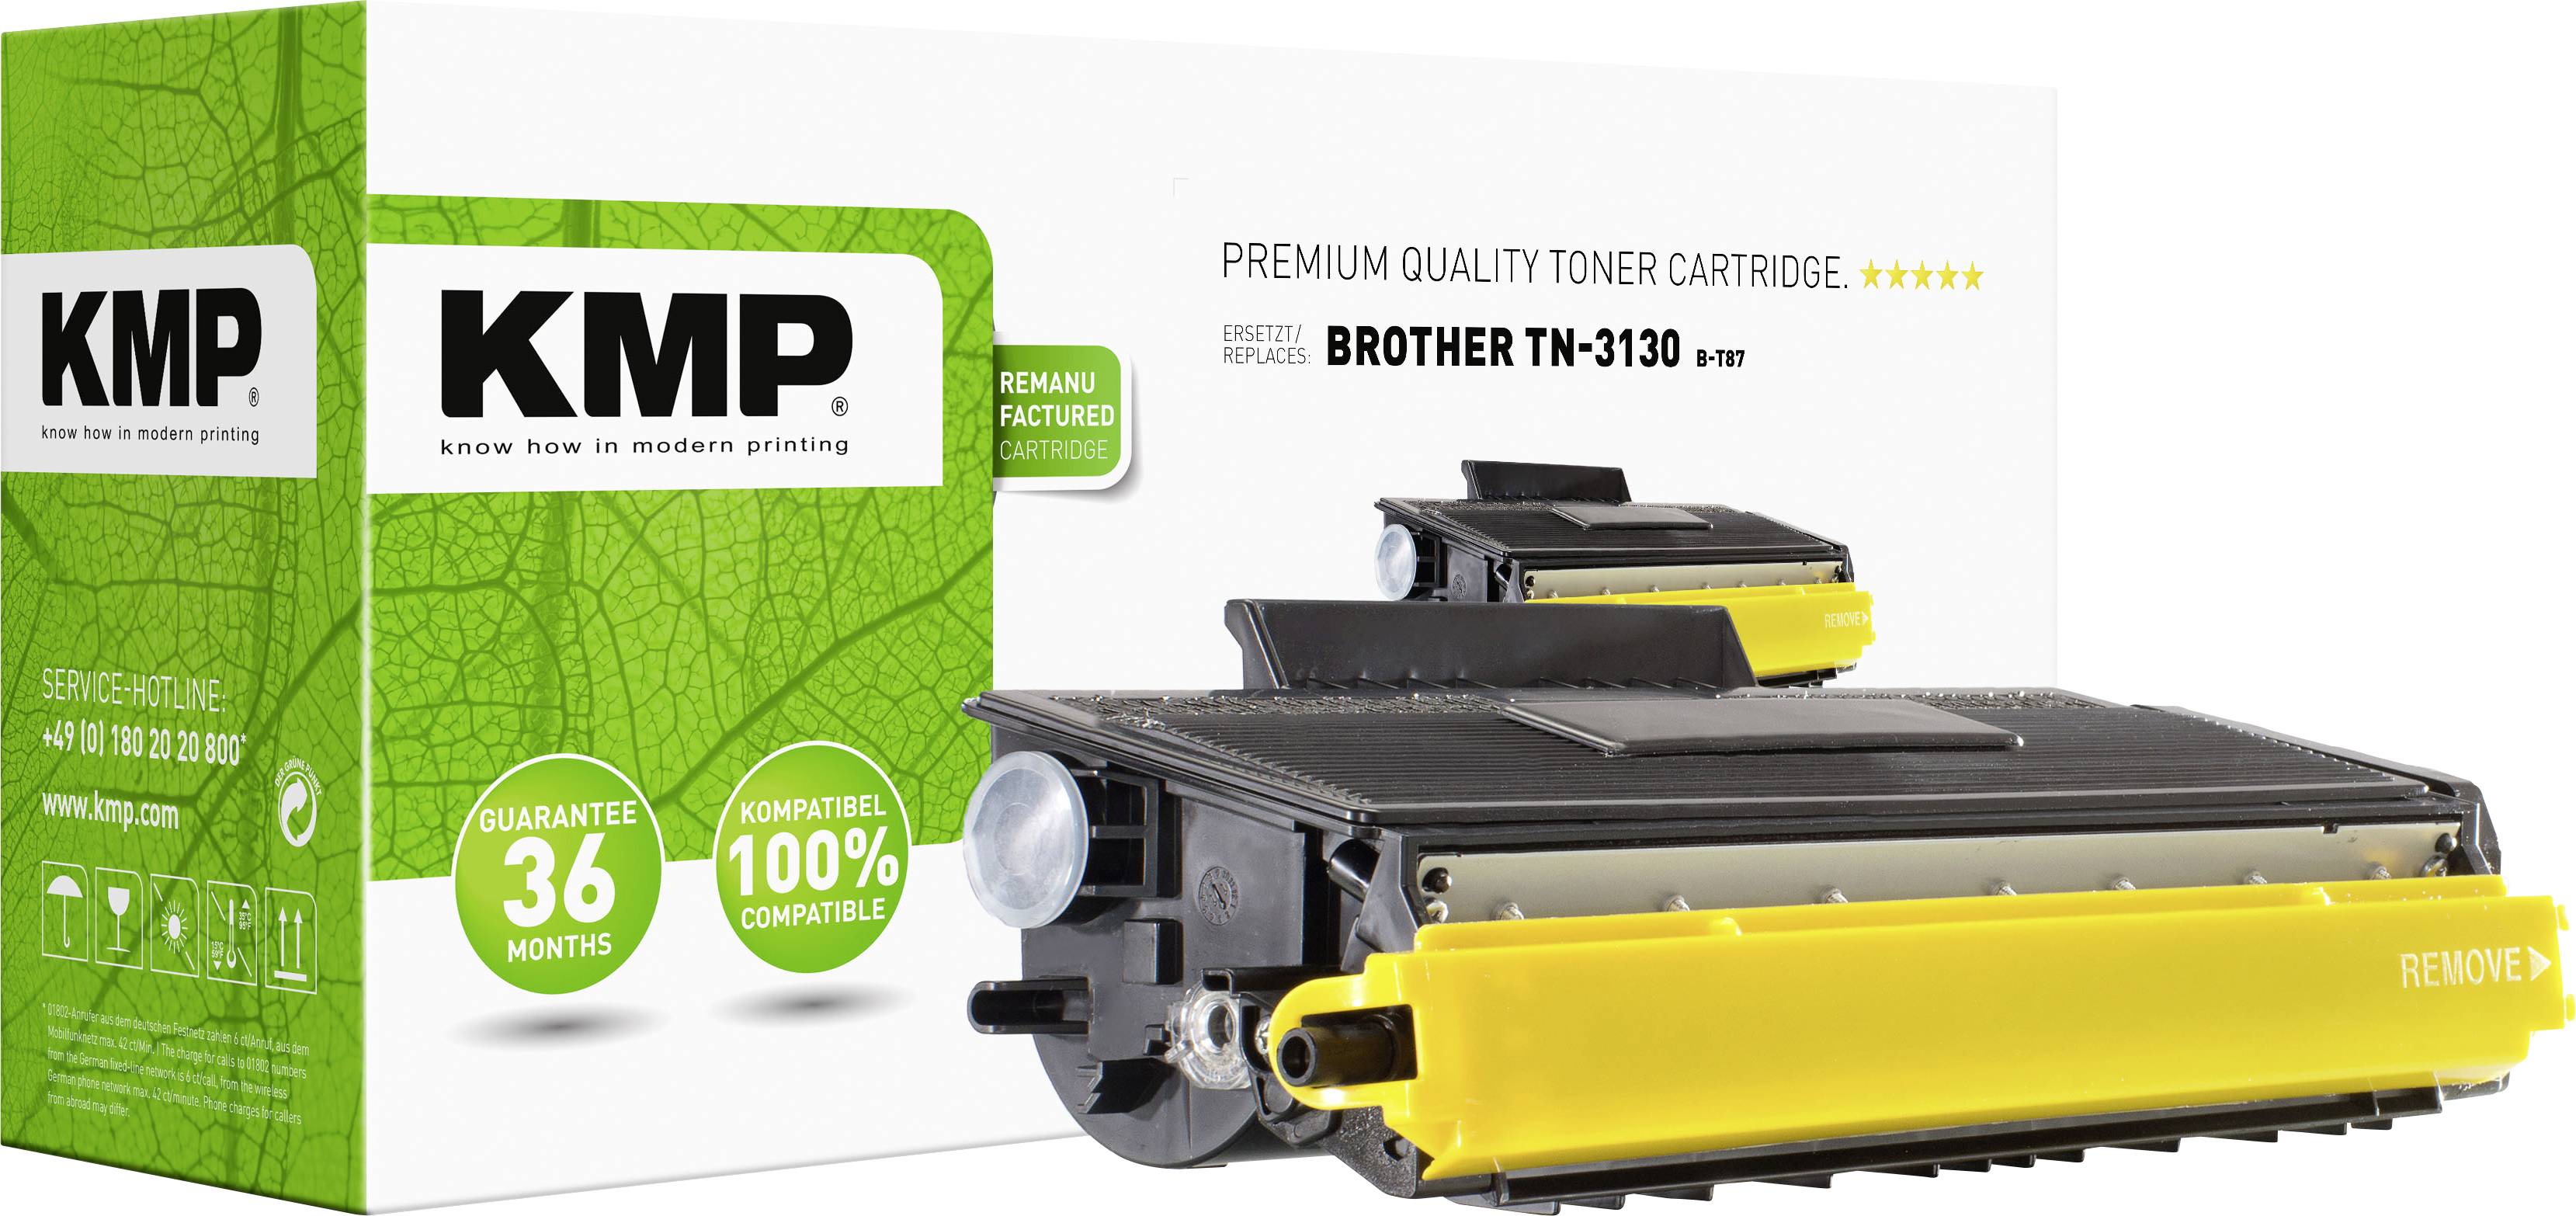 Vaag Knooppunt Waarnemen KMP Toner cartridge replaced Brother TN-3130, TN3130 Compatible Black 3500  Sides B-T87 | Conrad.com